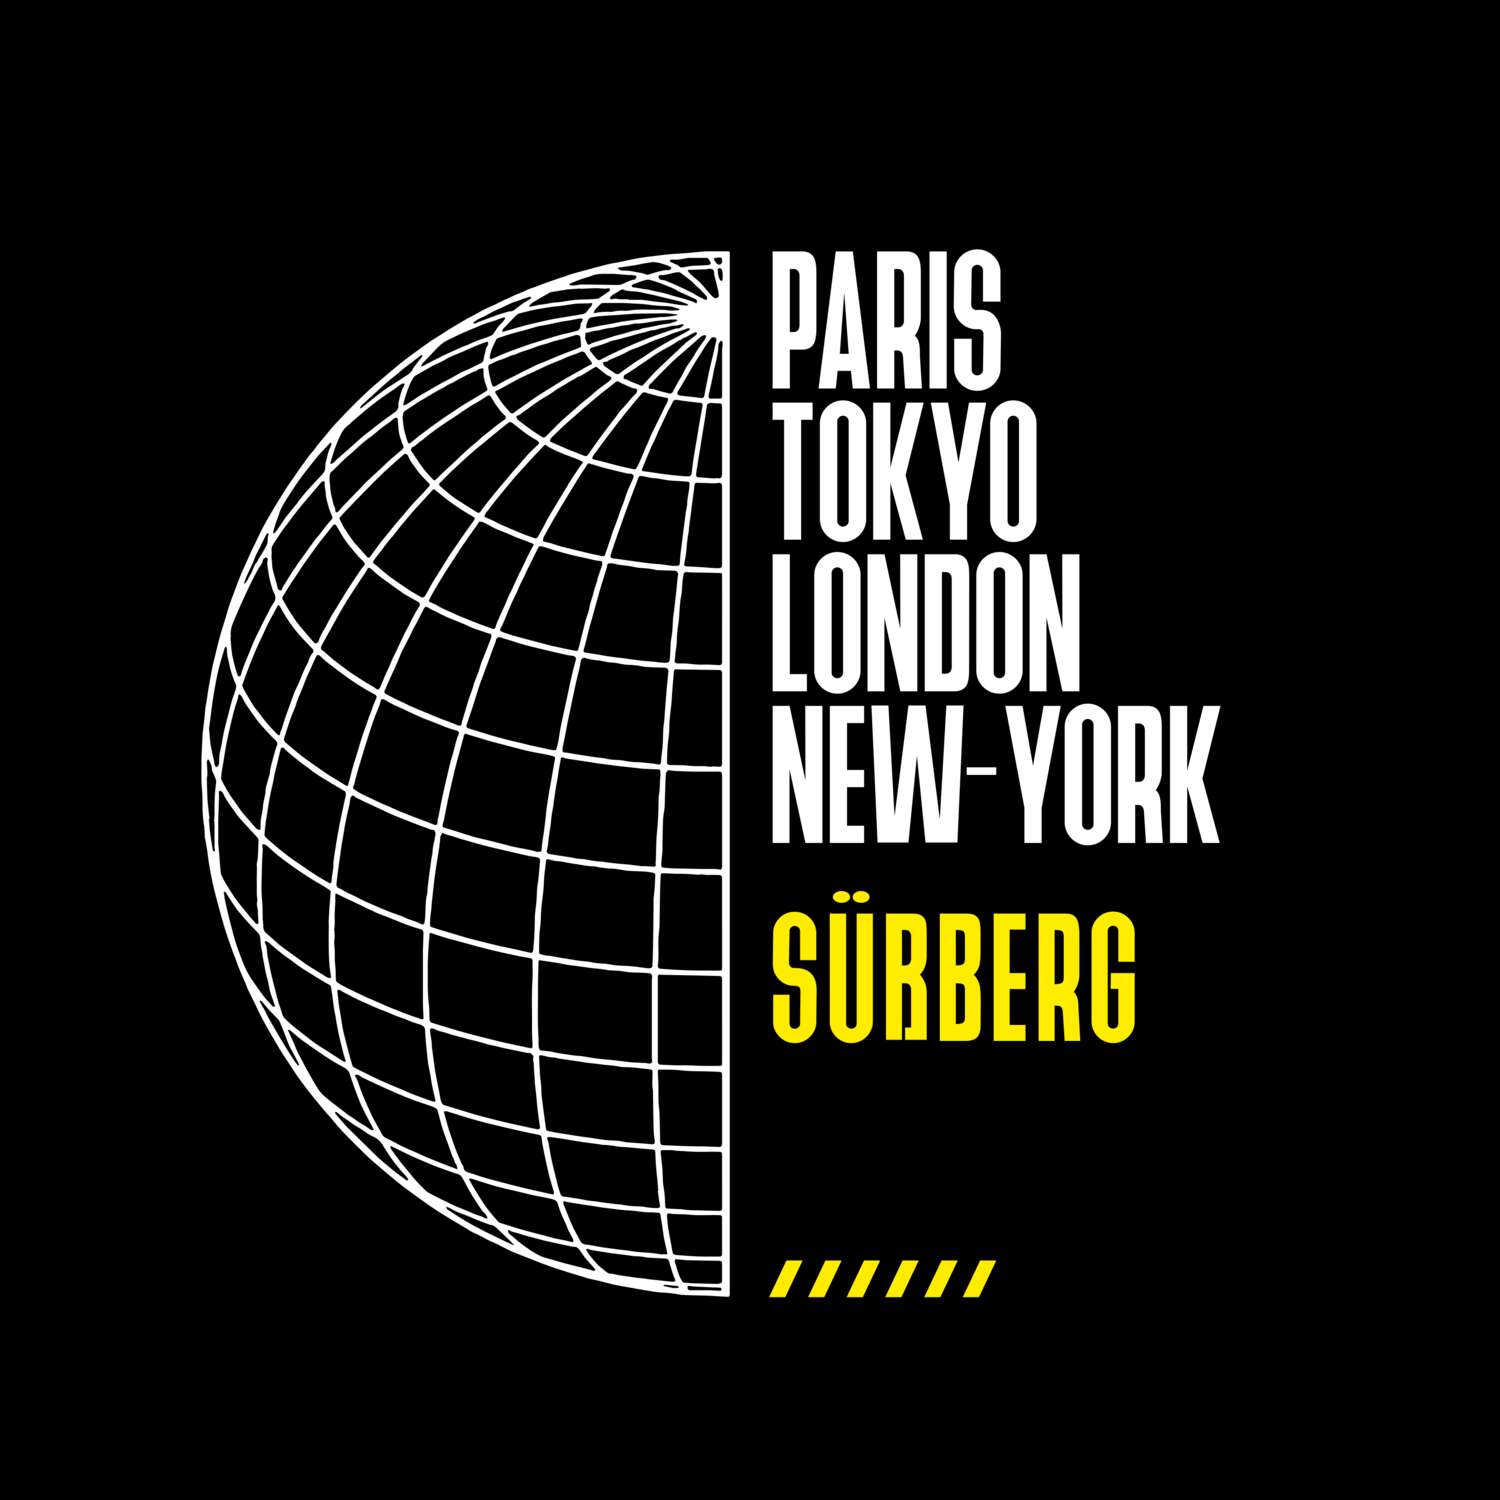 Süßberg T-Shirt »Paris Tokyo London«